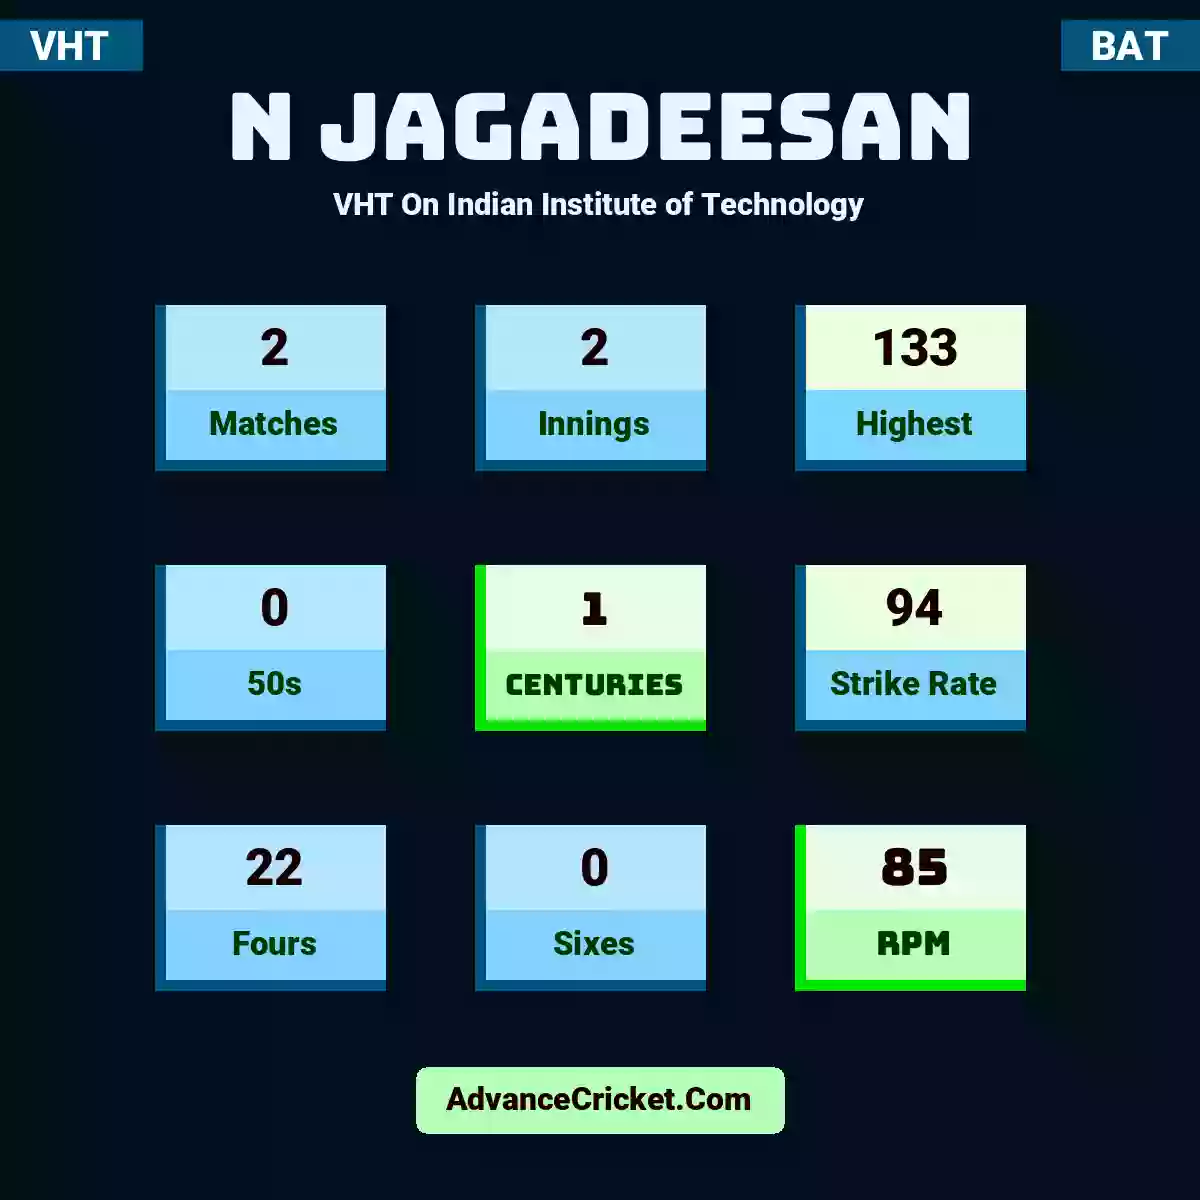 N Jagadeesan VHT  On Indian Institute of Technology, N Jagadeesan played 2 matches, scored 133 runs as highest, 0 half-centuries, and 1 centuries, with a strike rate of 94. N.Jagadeesan hit 22 fours and 0 sixes, with an RPM of 85.